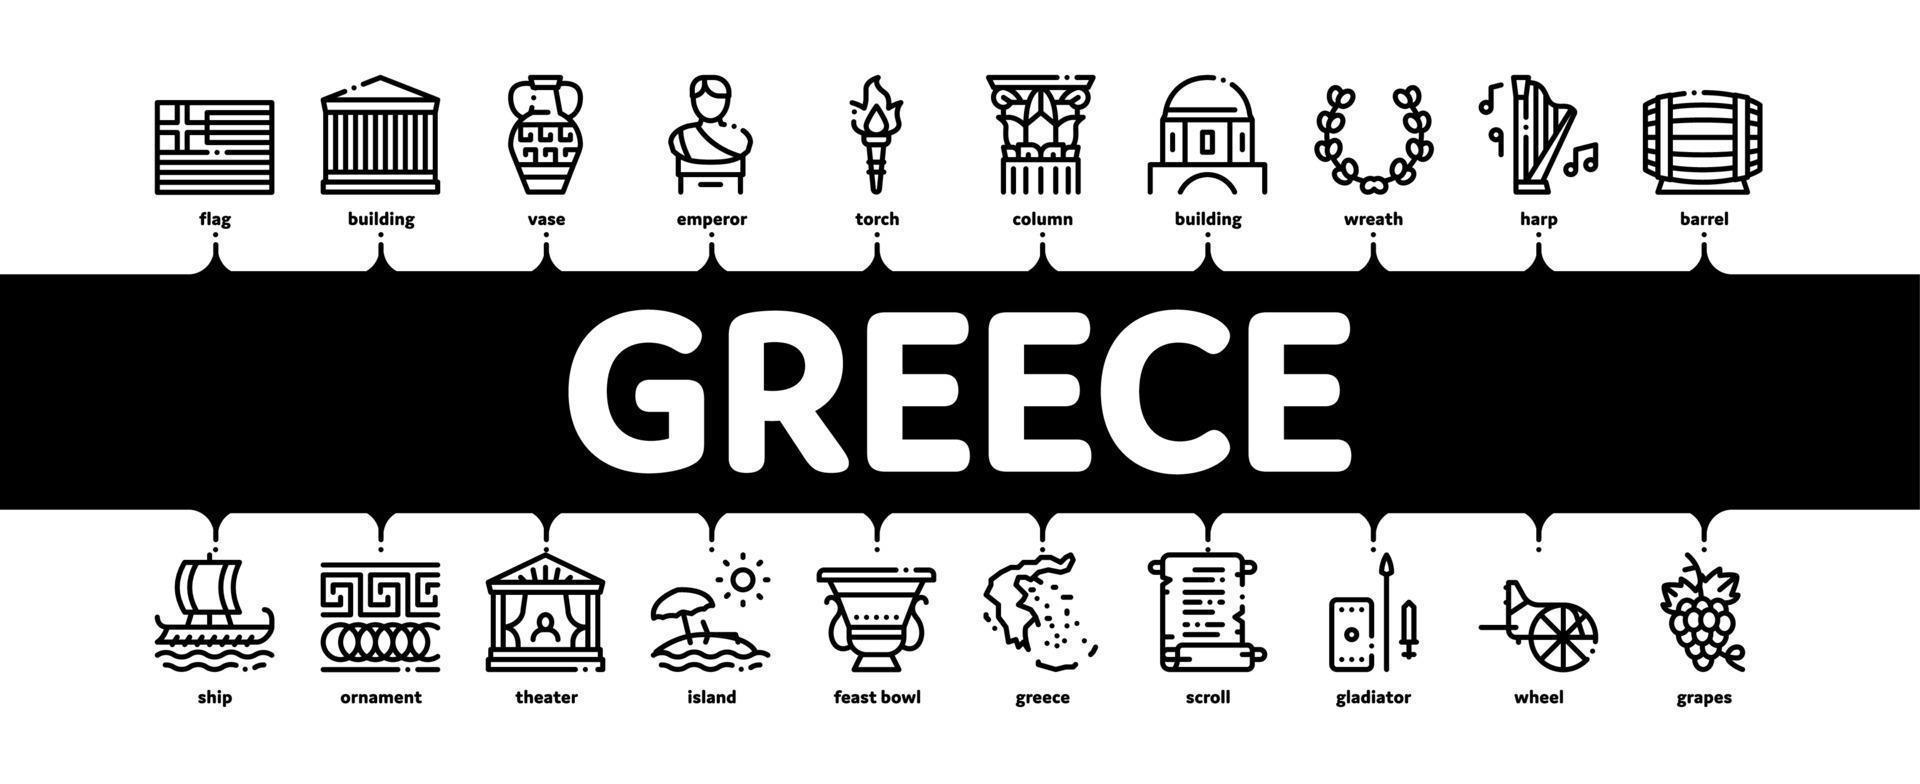 grekland Land historia minimal infographic baner vektor